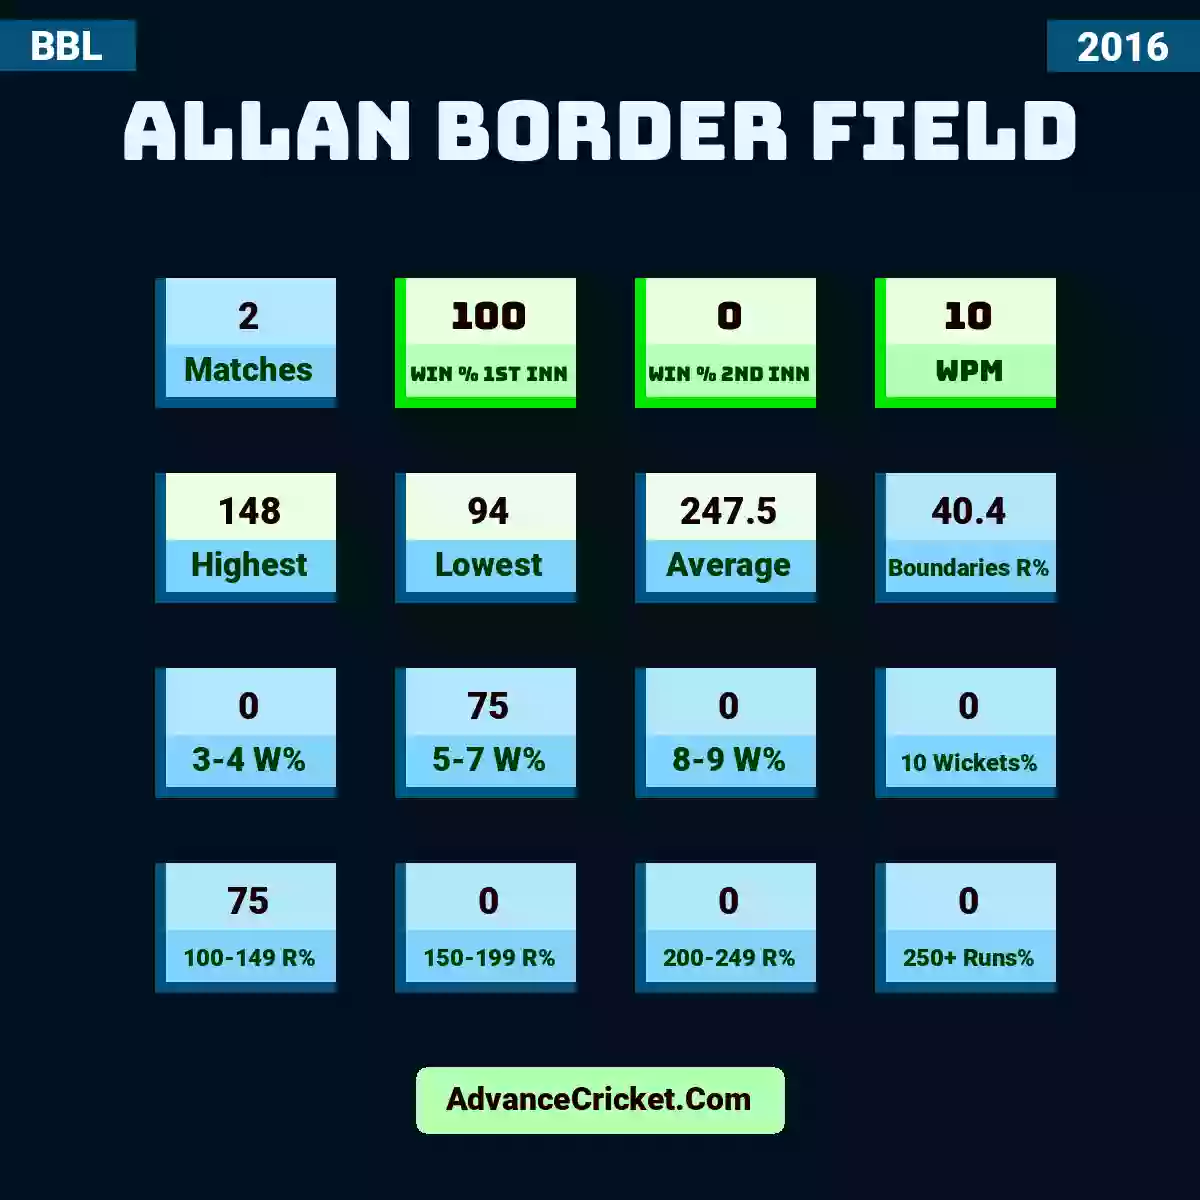 Image showing Allan Border Field with Matches: 2, Win % 1st Inn: 100, Win % 2nd Inn: 0, WPM: 10, Highest: 148, Lowest: 94, Average: 247.5, Boundaries R%: 40.4, 3-4 W%: 0, 5-7 W%: 75, 8-9 W%: 0, 10 Wickets%: 0, 100-149 R%: 75, 150-199 R%: 0, 200-249 R%: 0, 250+ Runs%: 0.